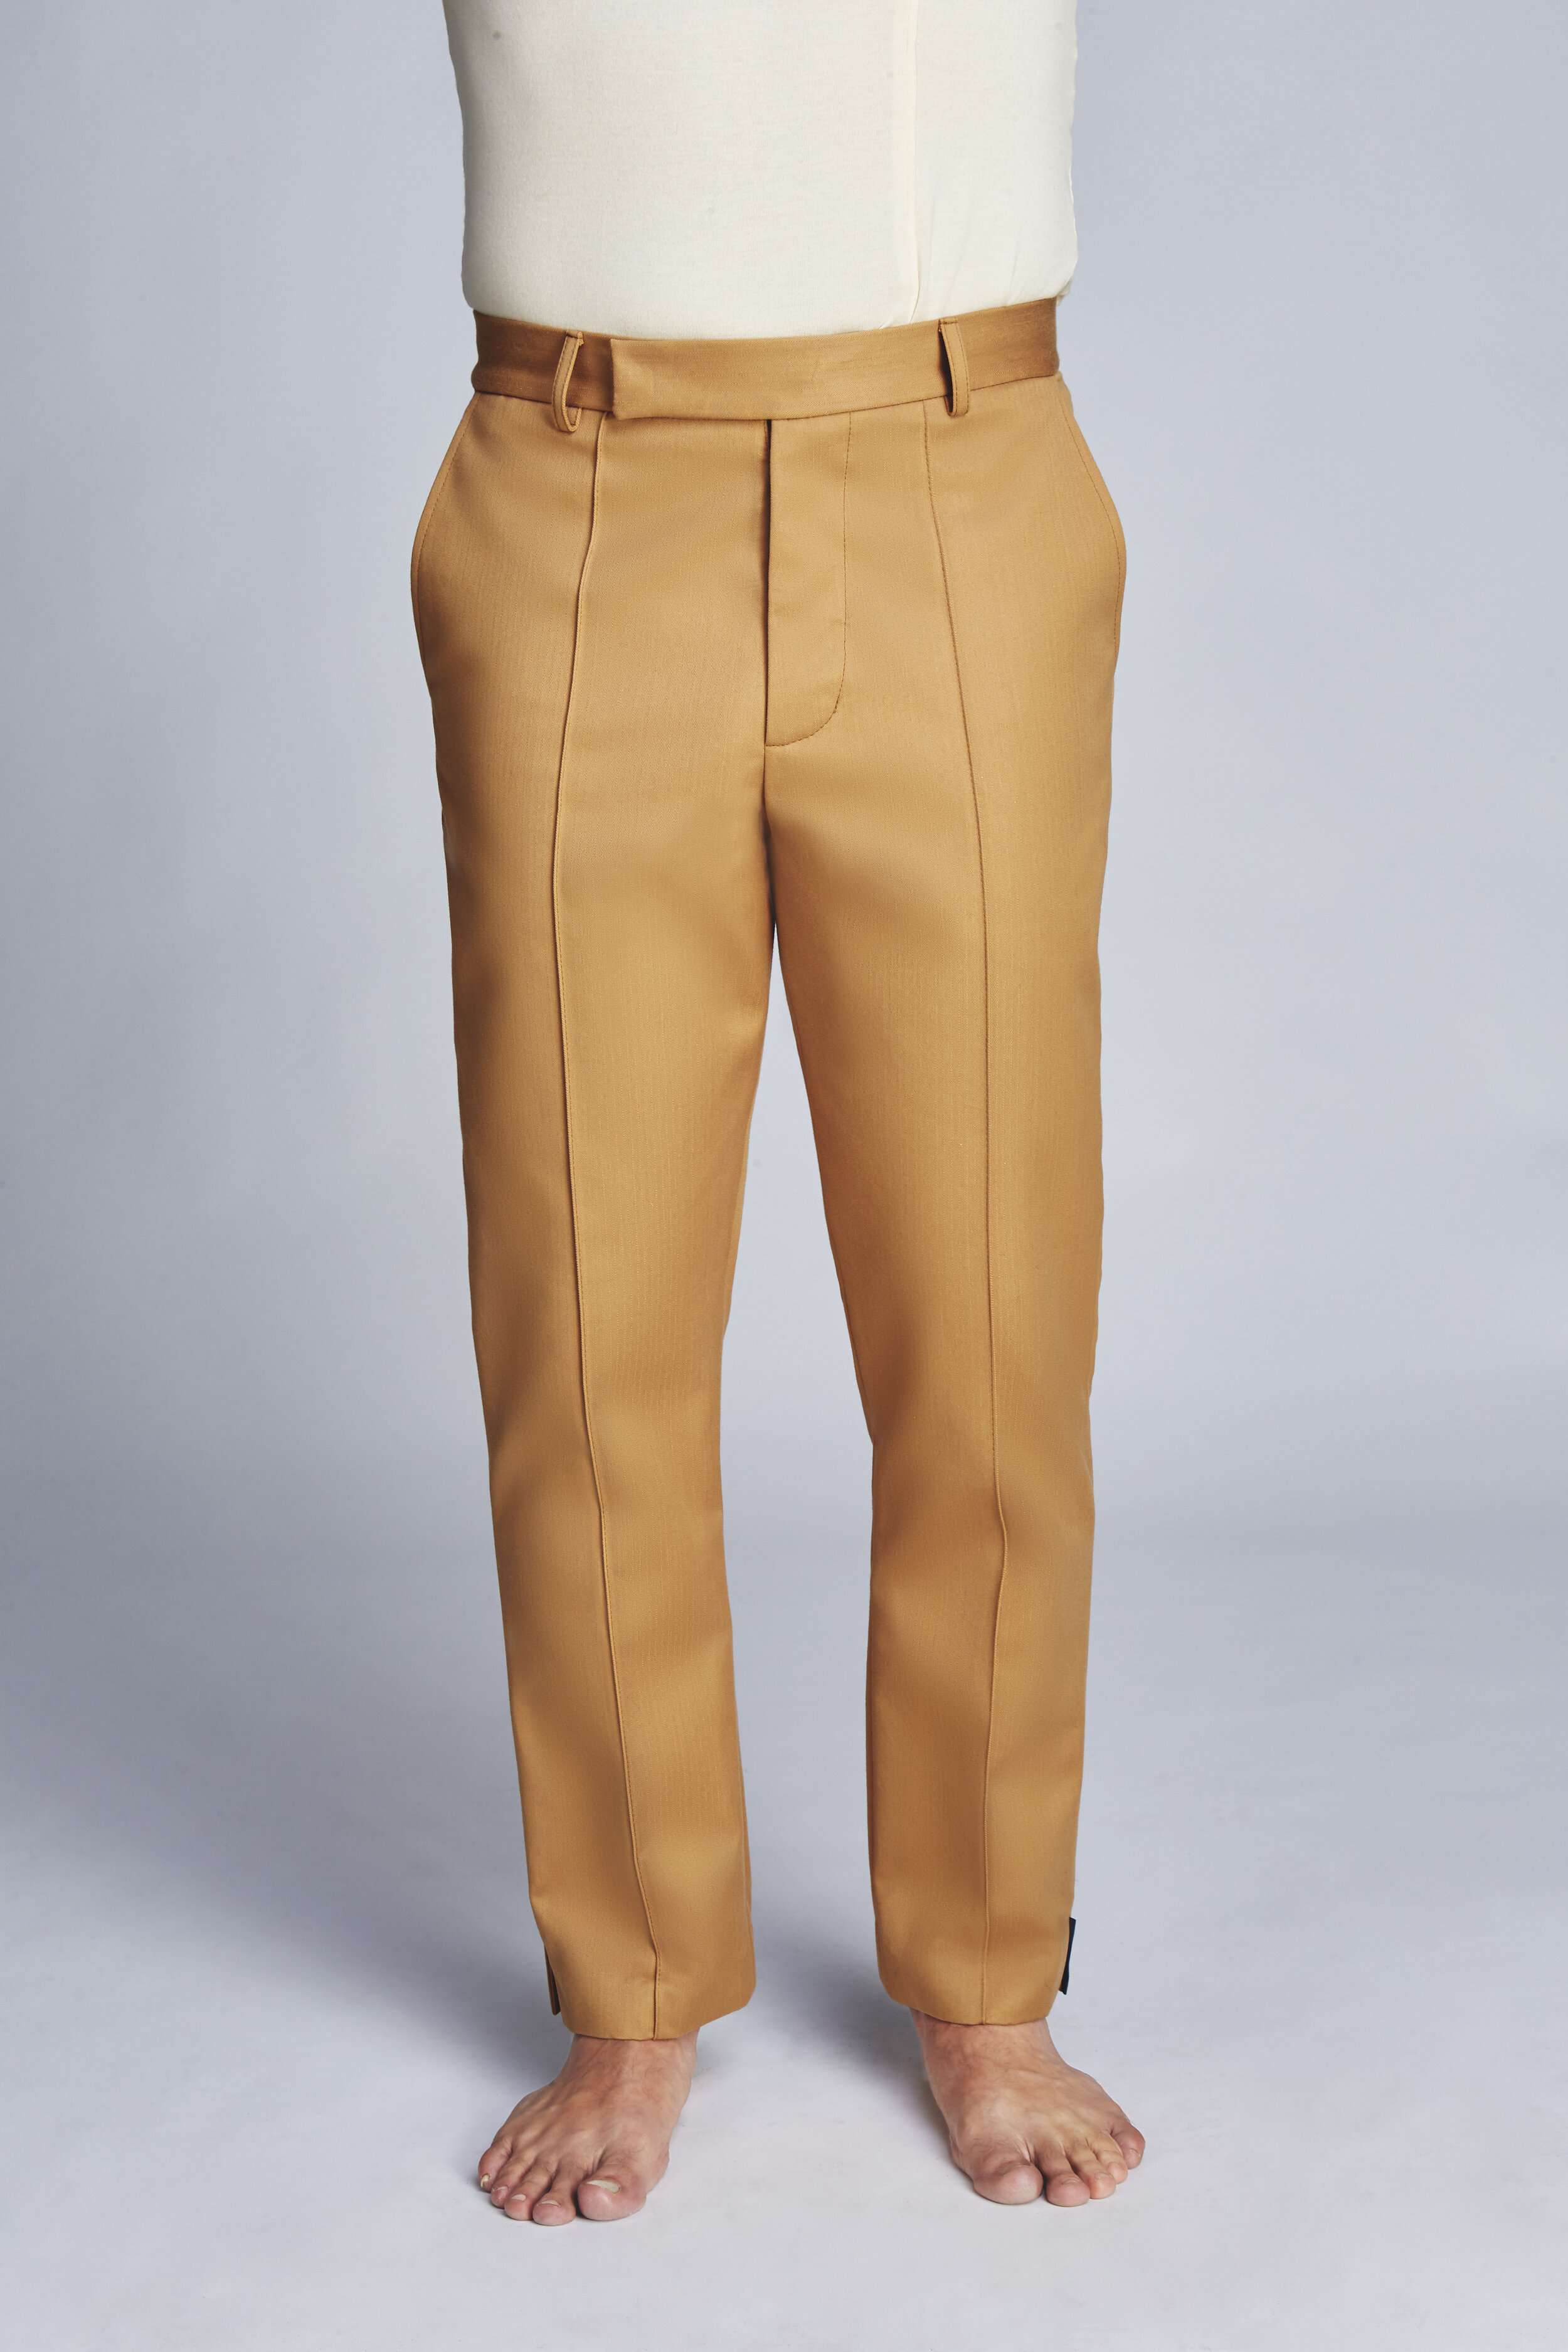 Natural AMI Wool Pants in Beige for Men Slacks and Chinos Slacks and Chinos AMI Trousers Mens Trousers 